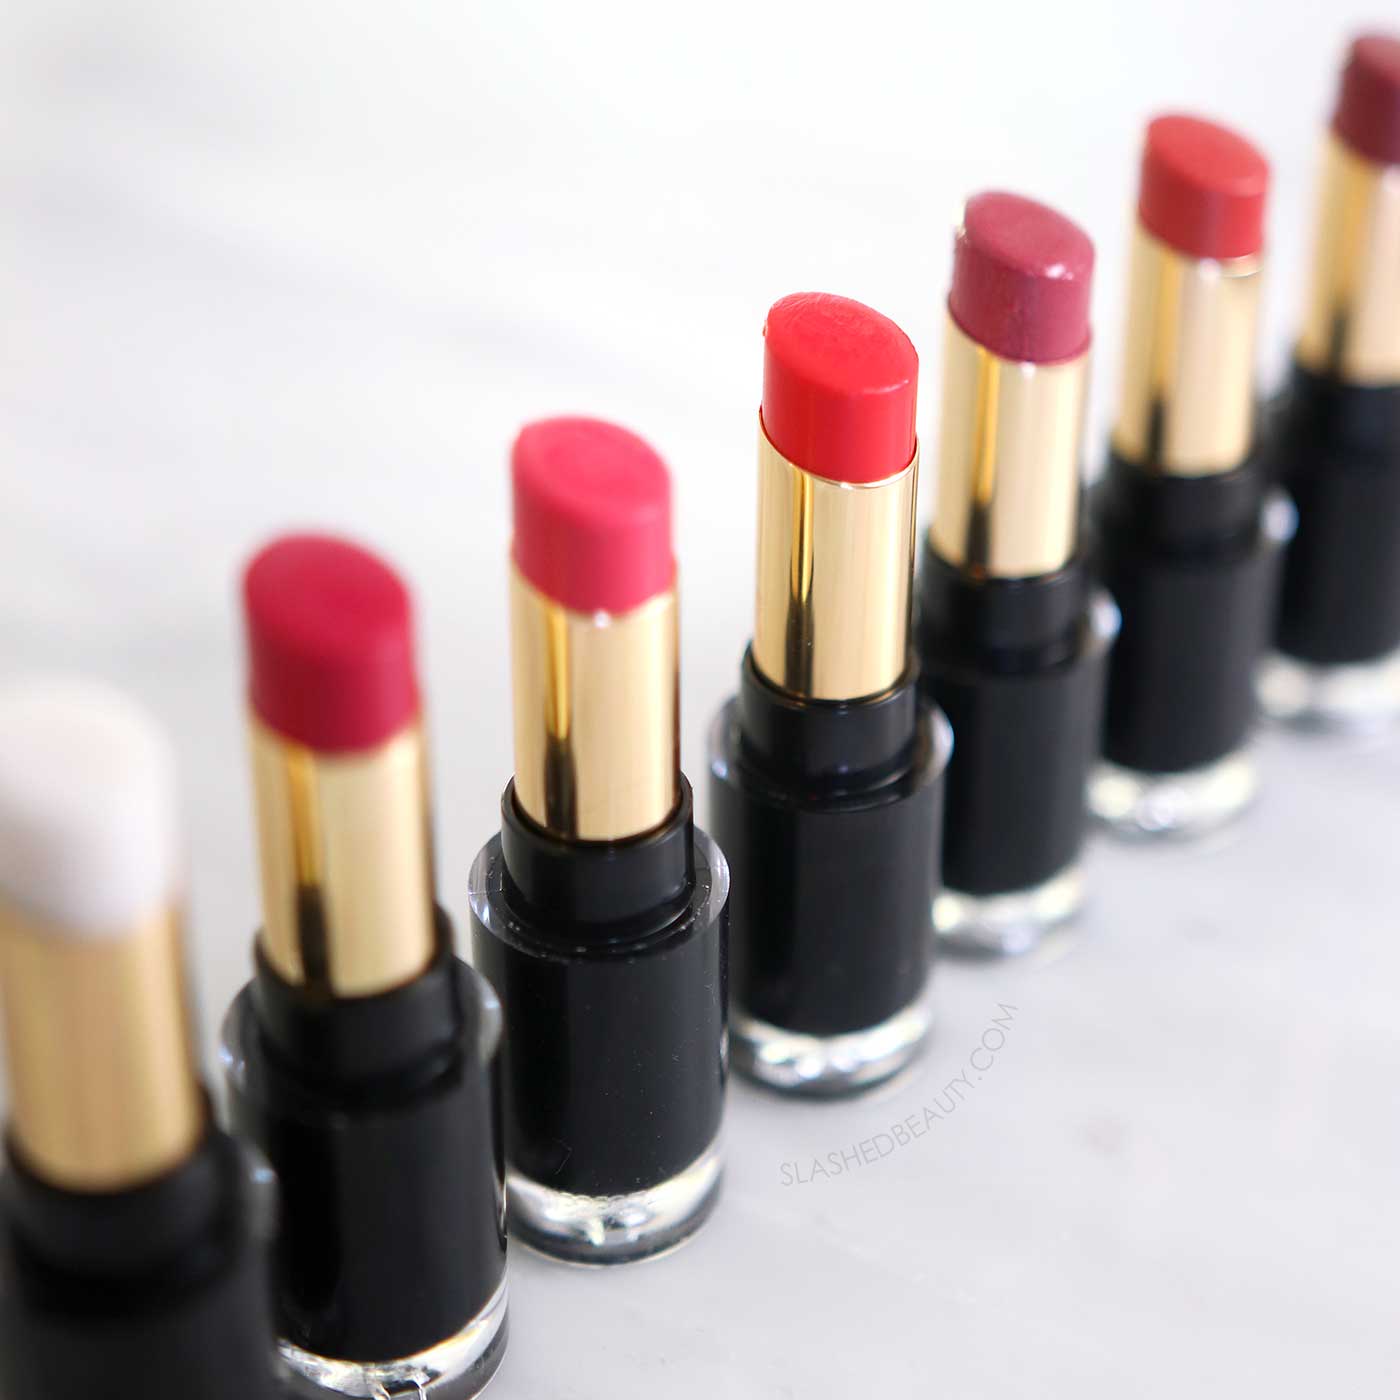 Revlon Super Lustrous Melting Glass Shine Lipsticks Review & Swatches | Comfortable Glossy Drugstore Lipstick | Slashed Beauty